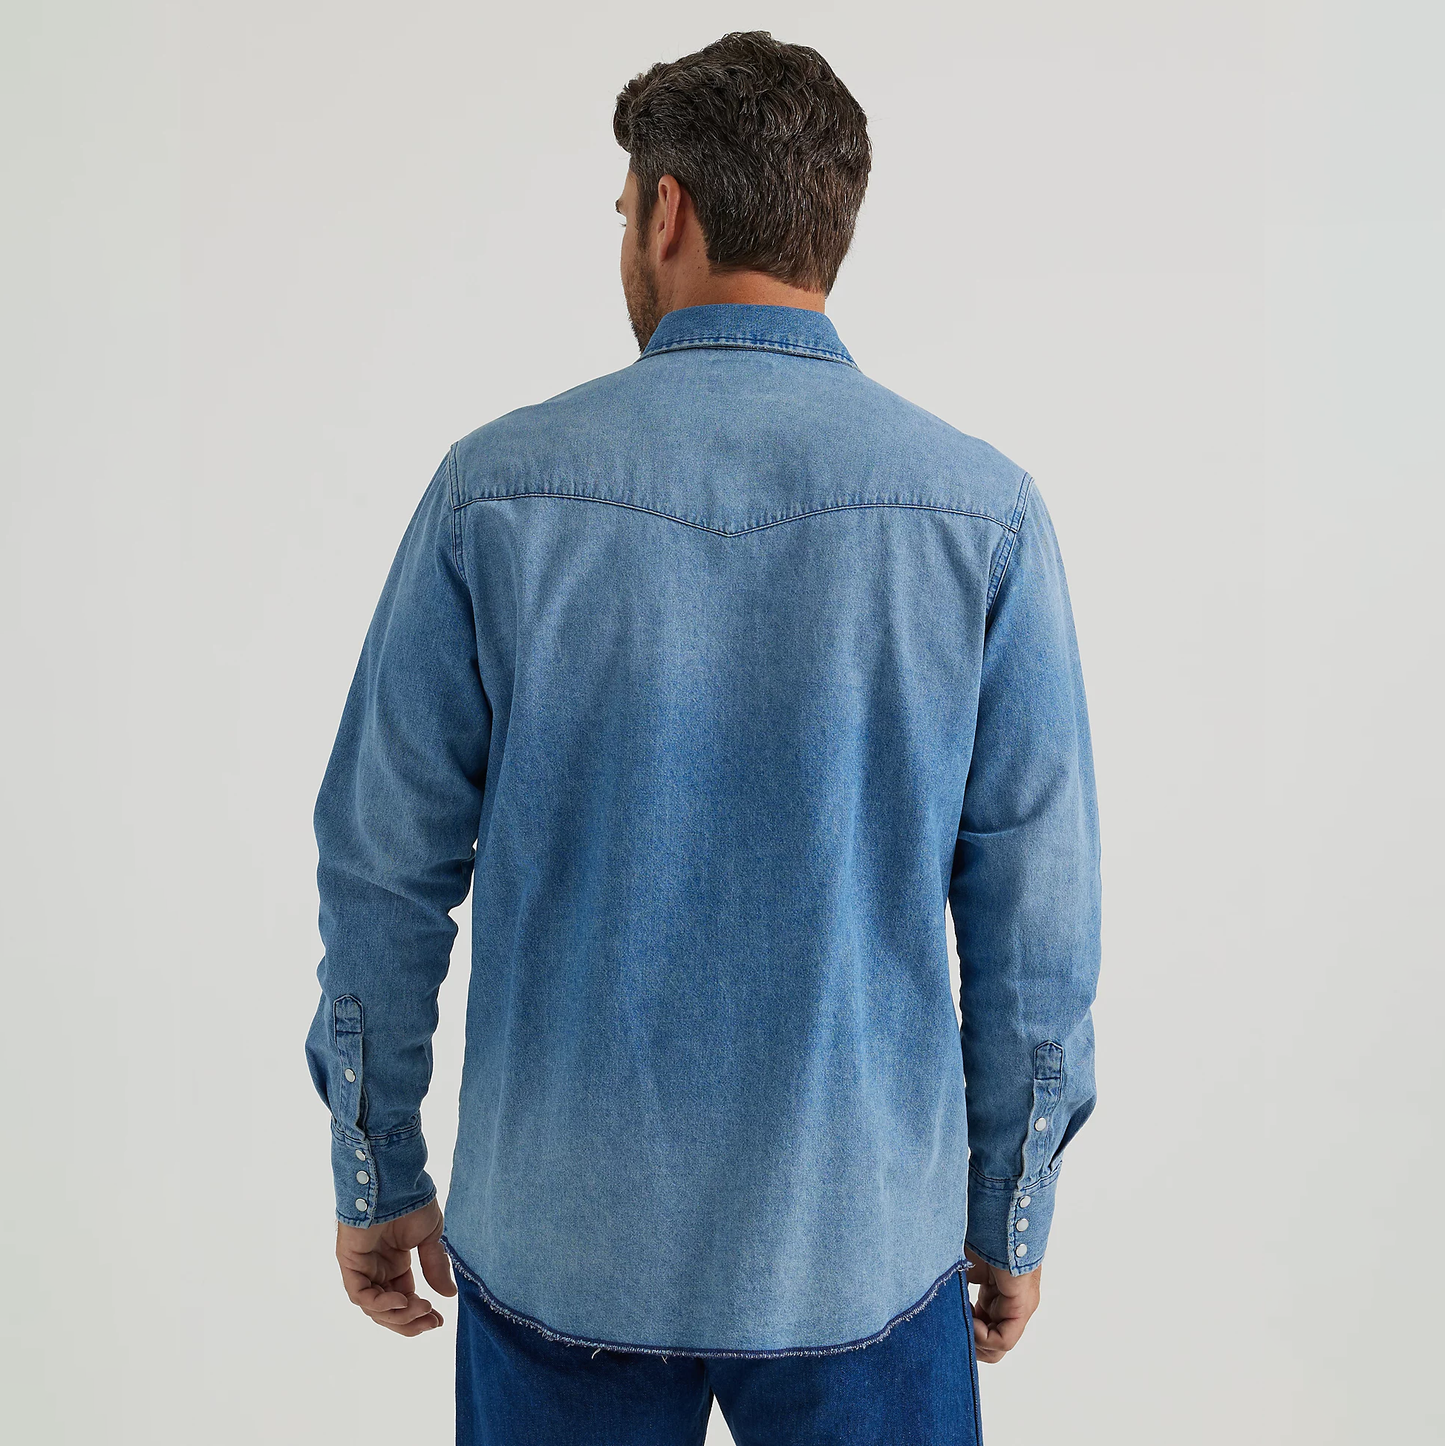 Wrangler Men's Vintage-Inspired Western Snap Workshirt - Medium Blue